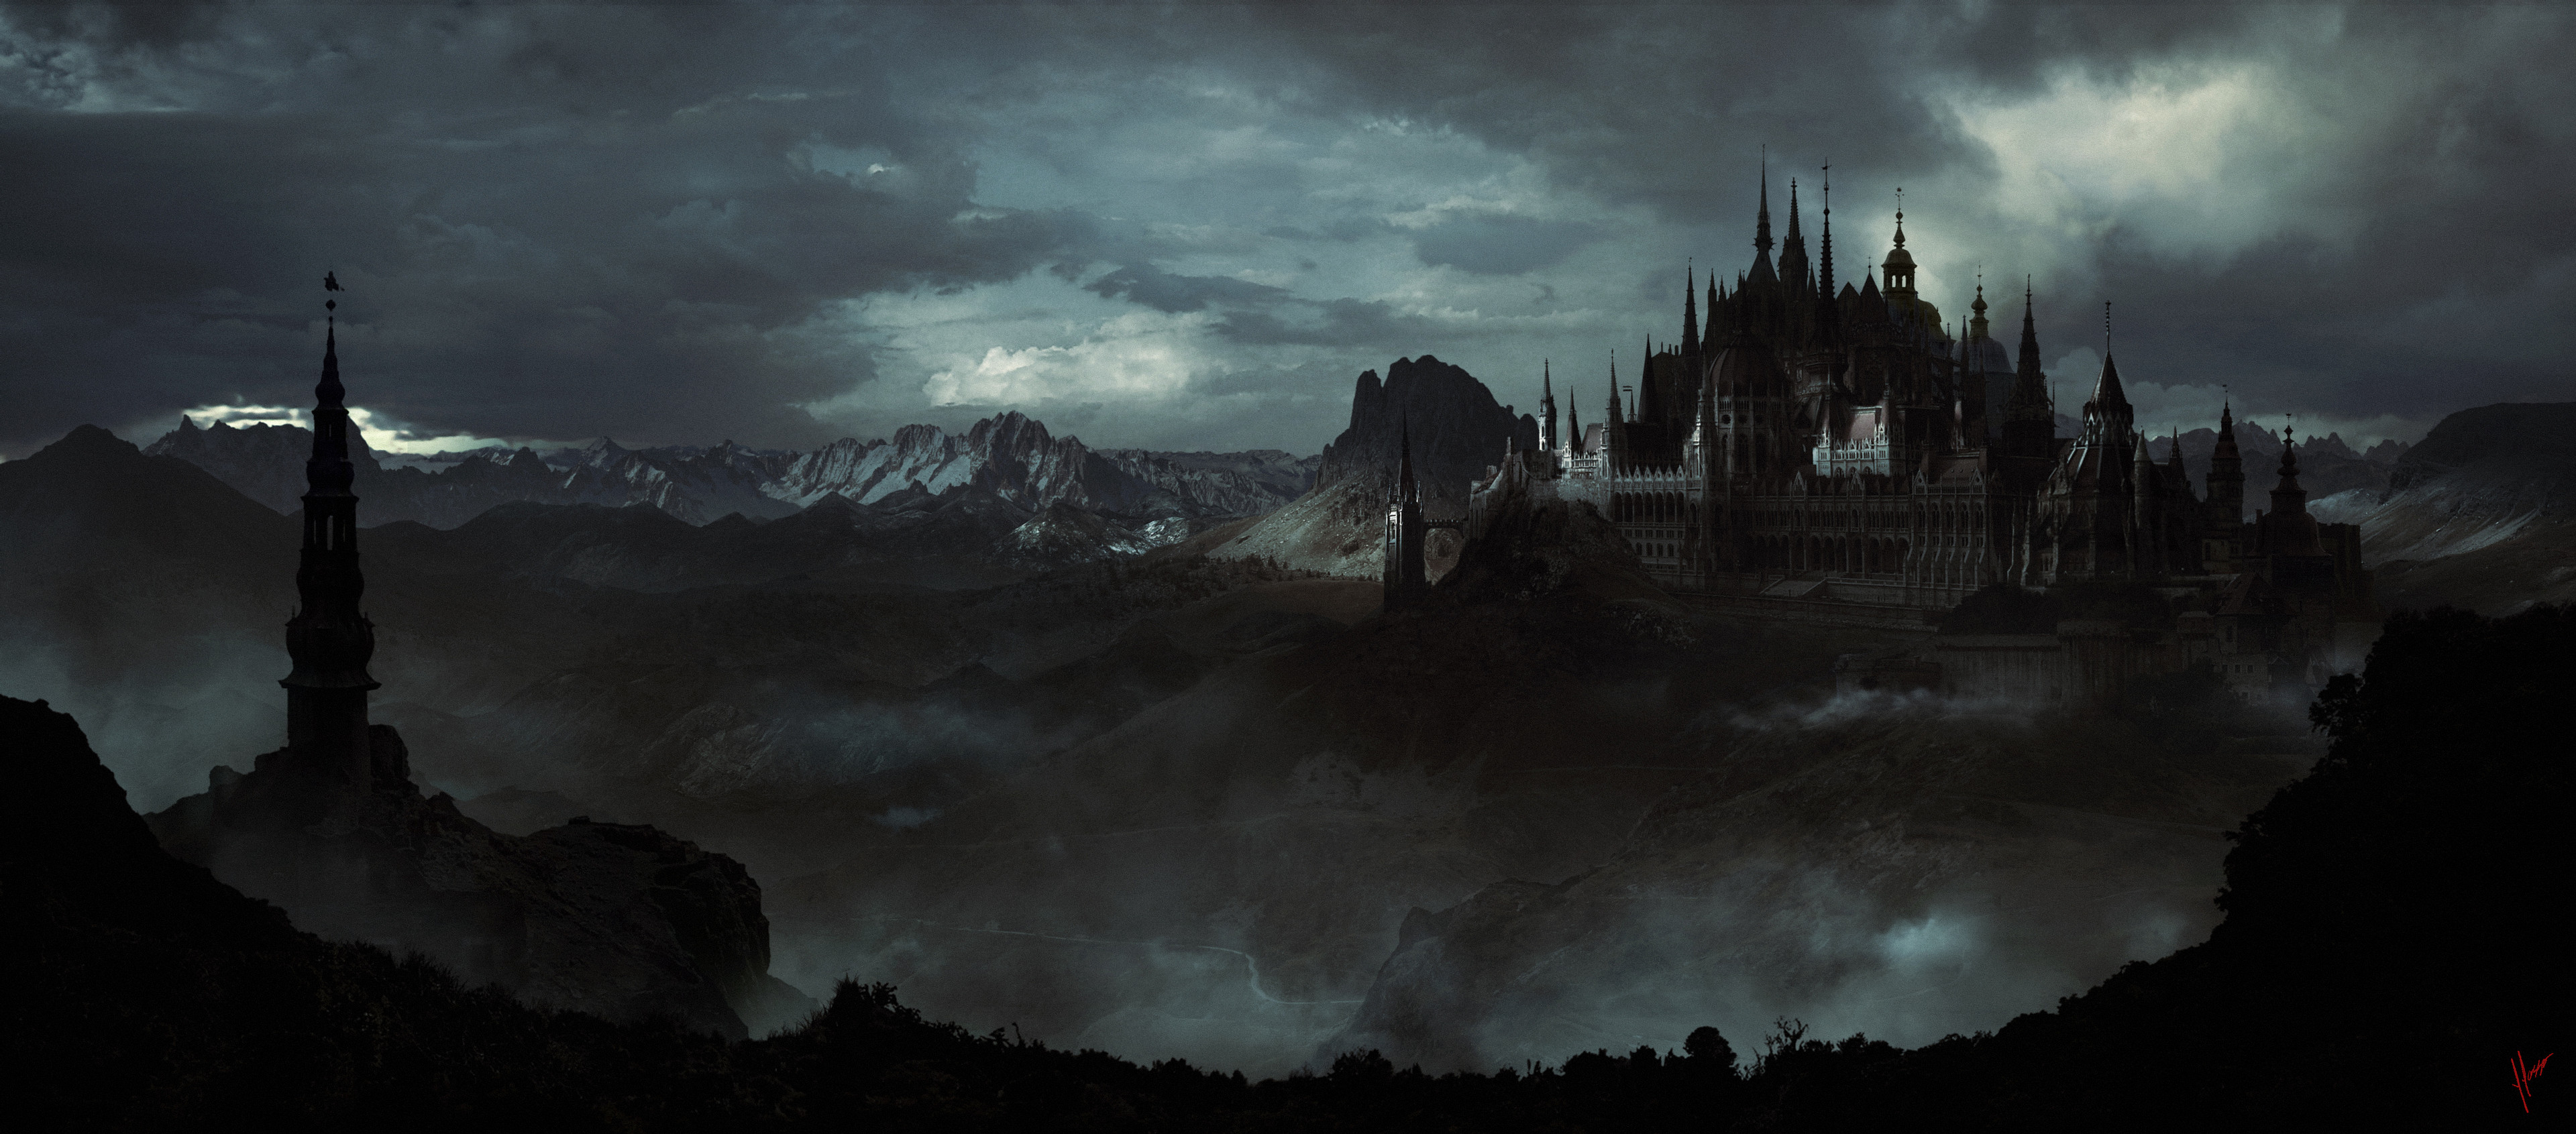 General 3840x1691 digital art artwork dark castle mountains